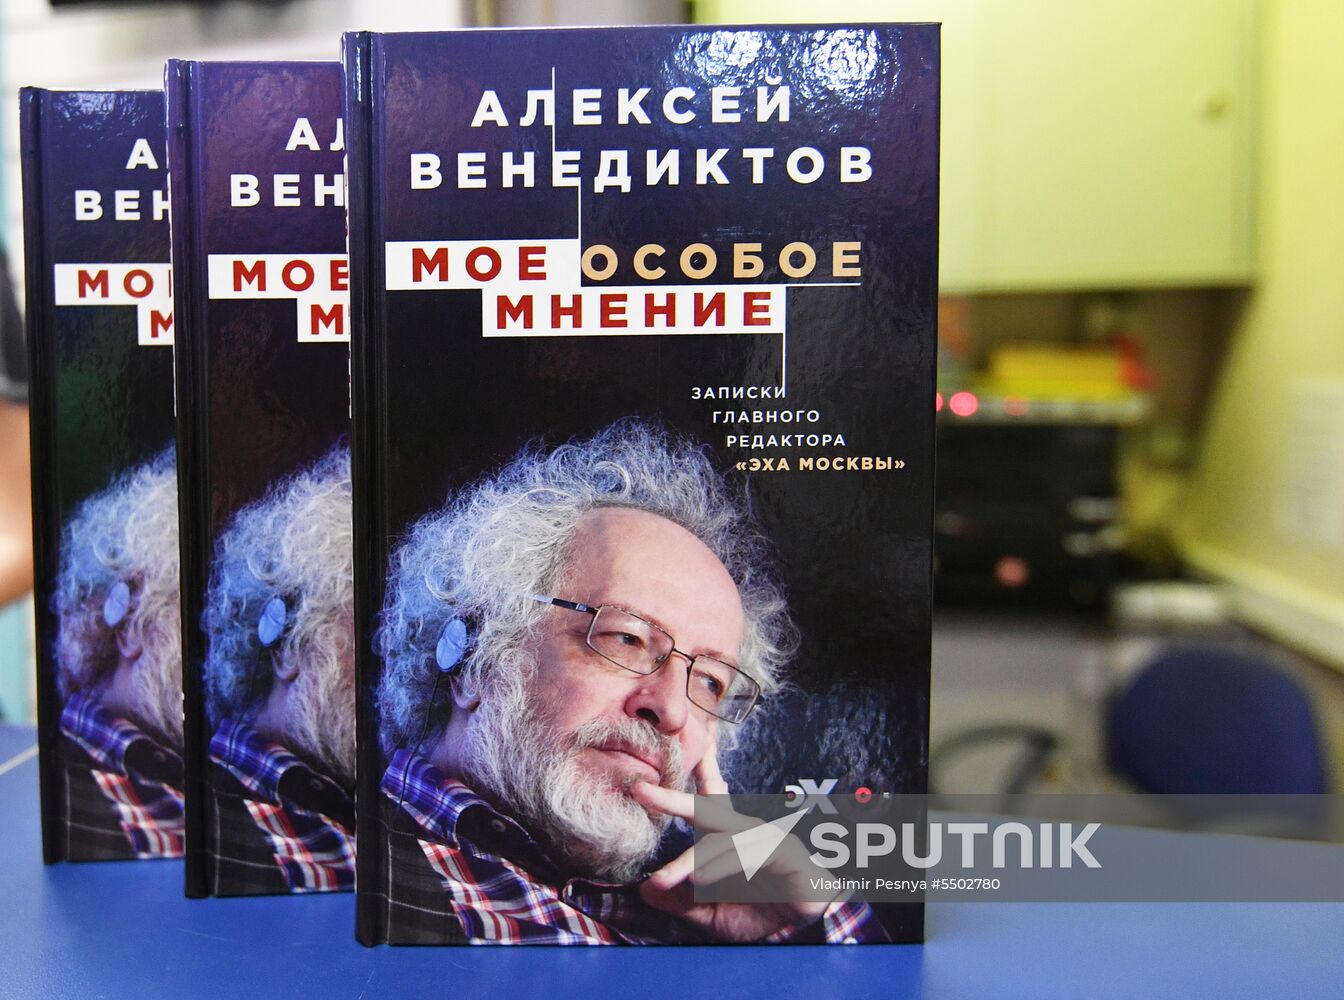 Presentation Alexei Venediktov's book My Special Opinion